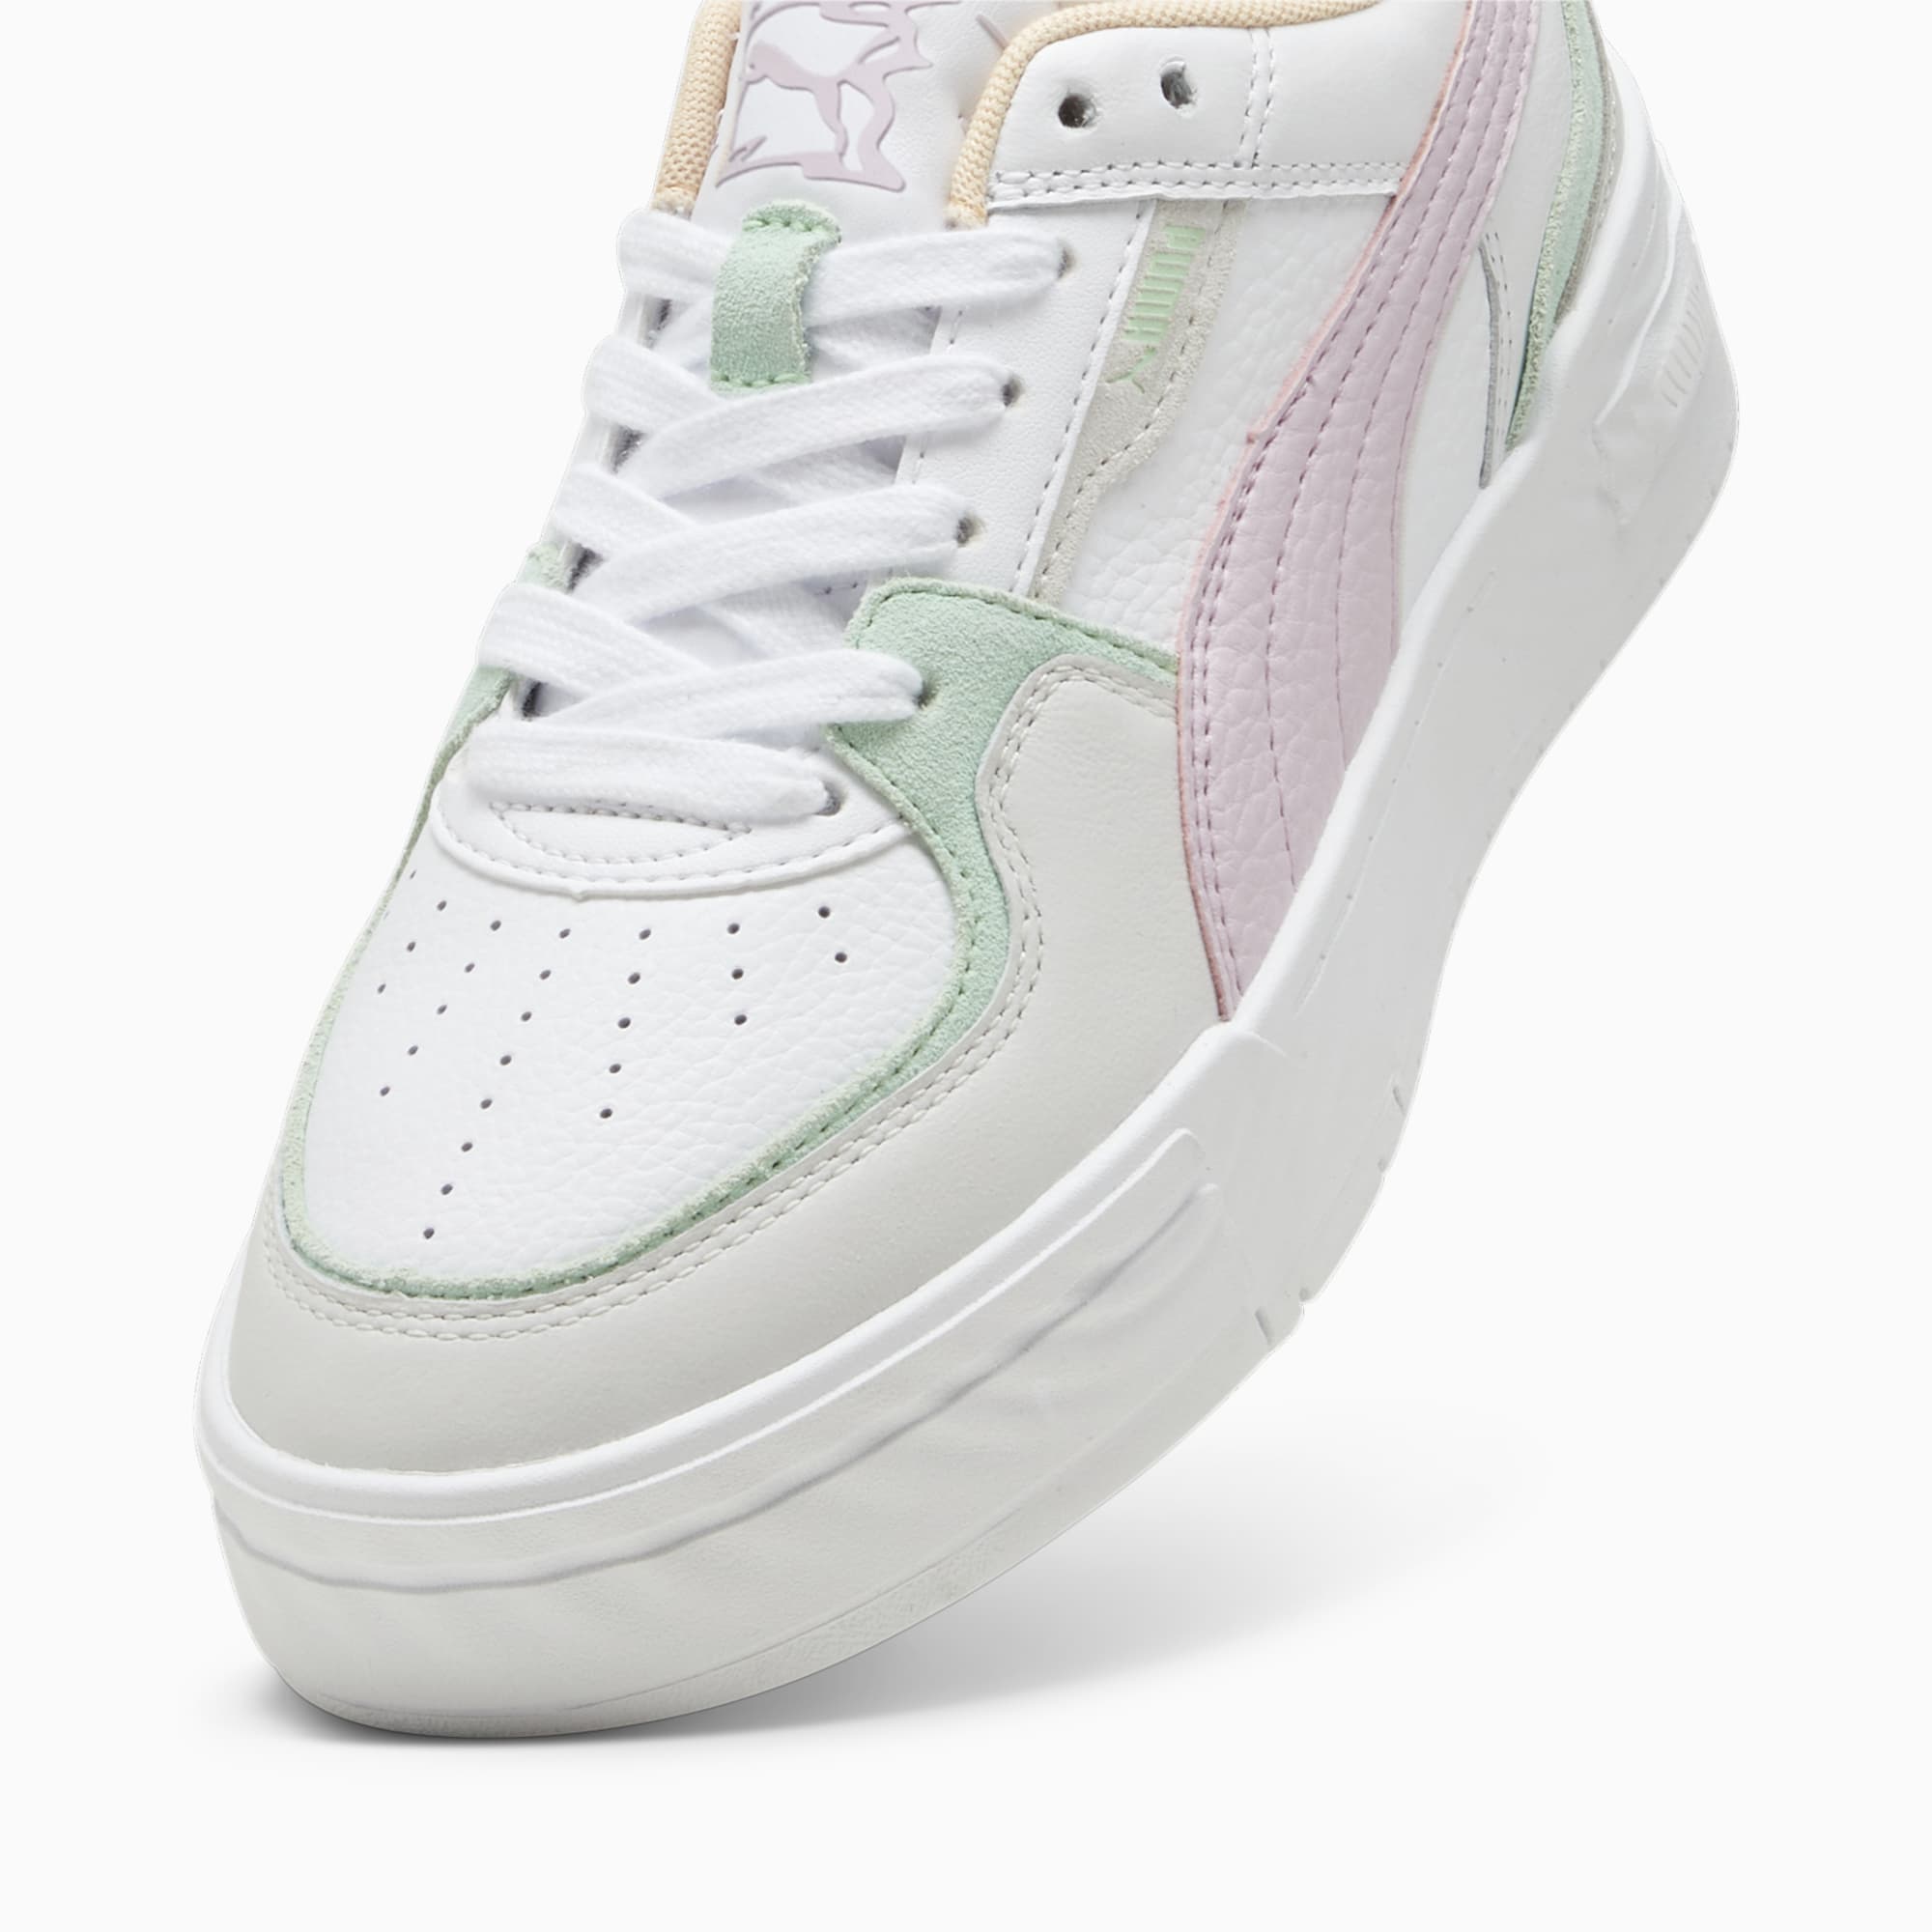 Women's PUMA Ca Pro Ripple Earth Sneakers, White/Fresh Mint/Grape Mist